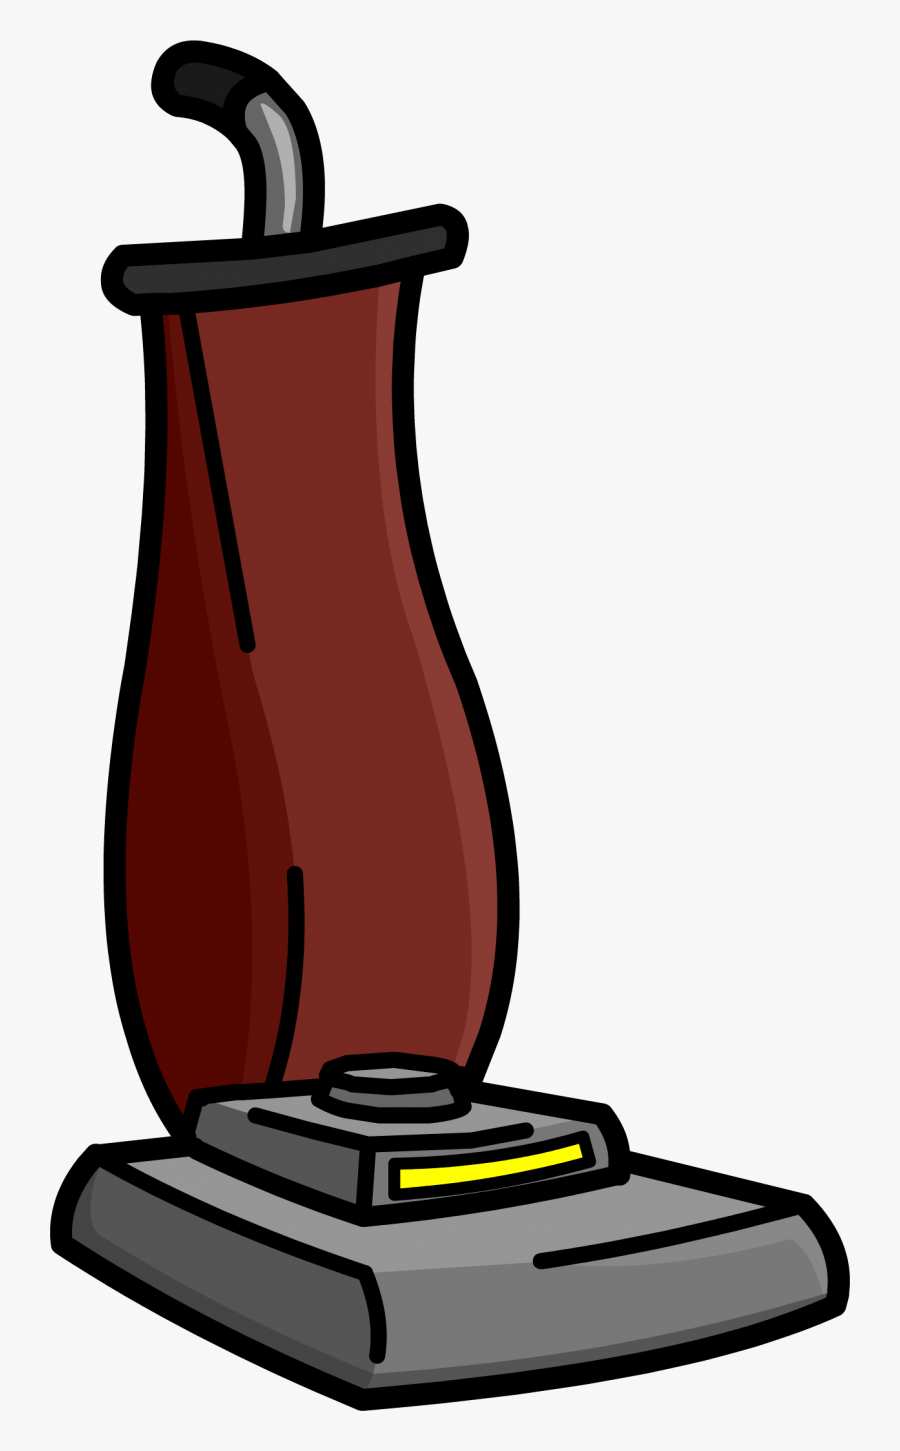 Vacuum Cleaner Png Image - Vacuum Cleaner Cartoon Png, Transparent Clipart